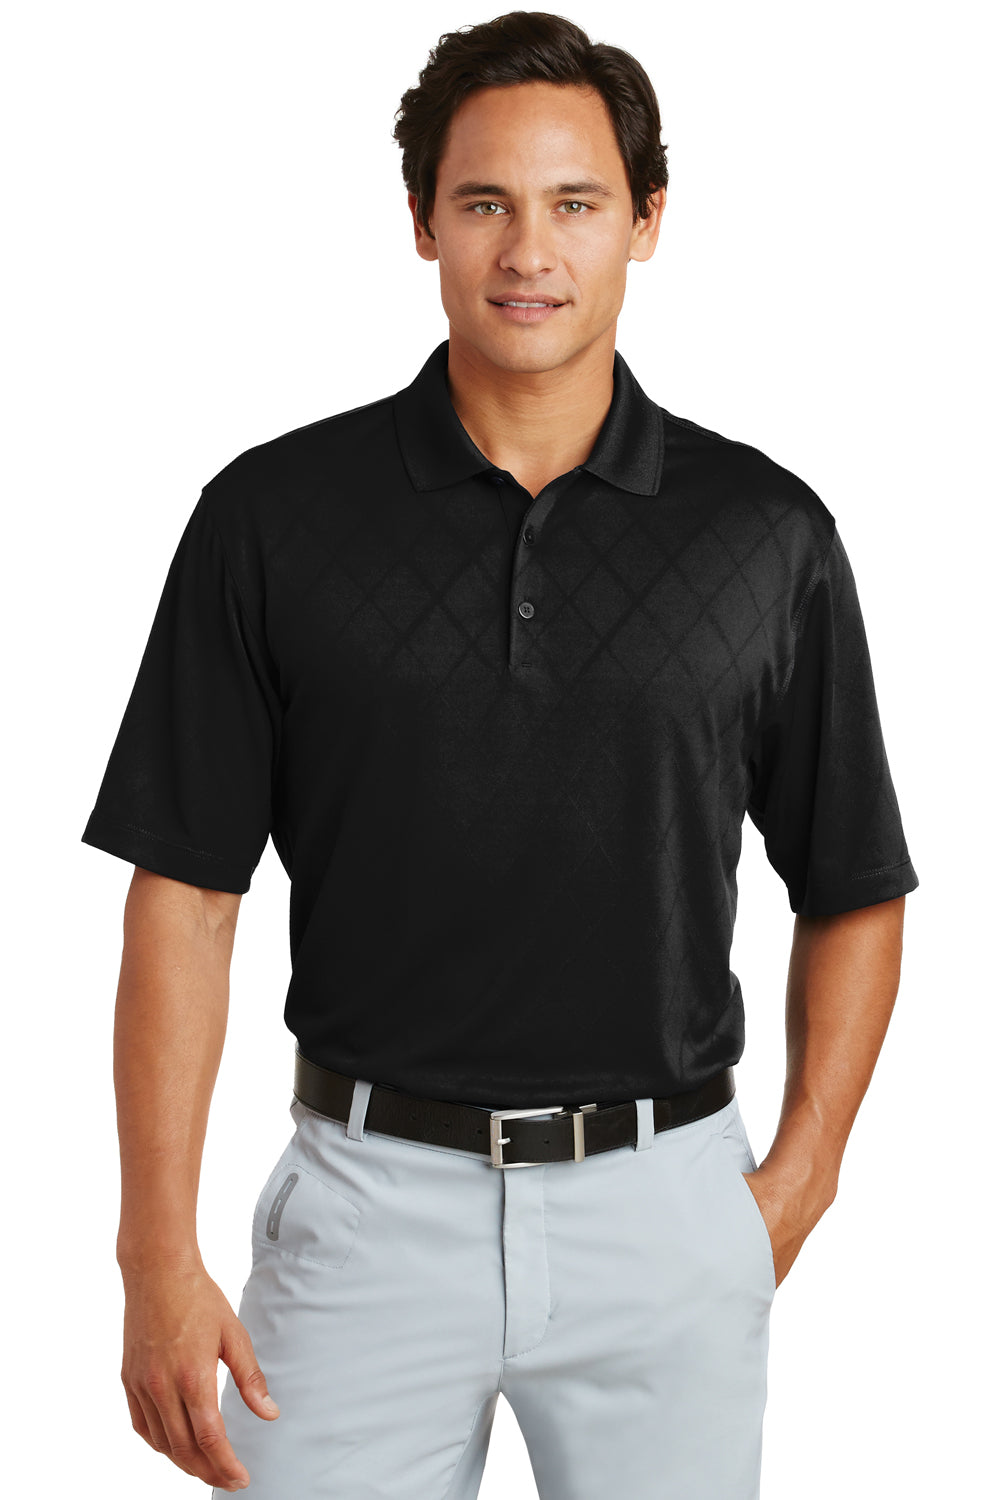 Nike 349899 Mens Dri-Fit Moisture Wicking Short Sleeve Polo Shirt Black Front